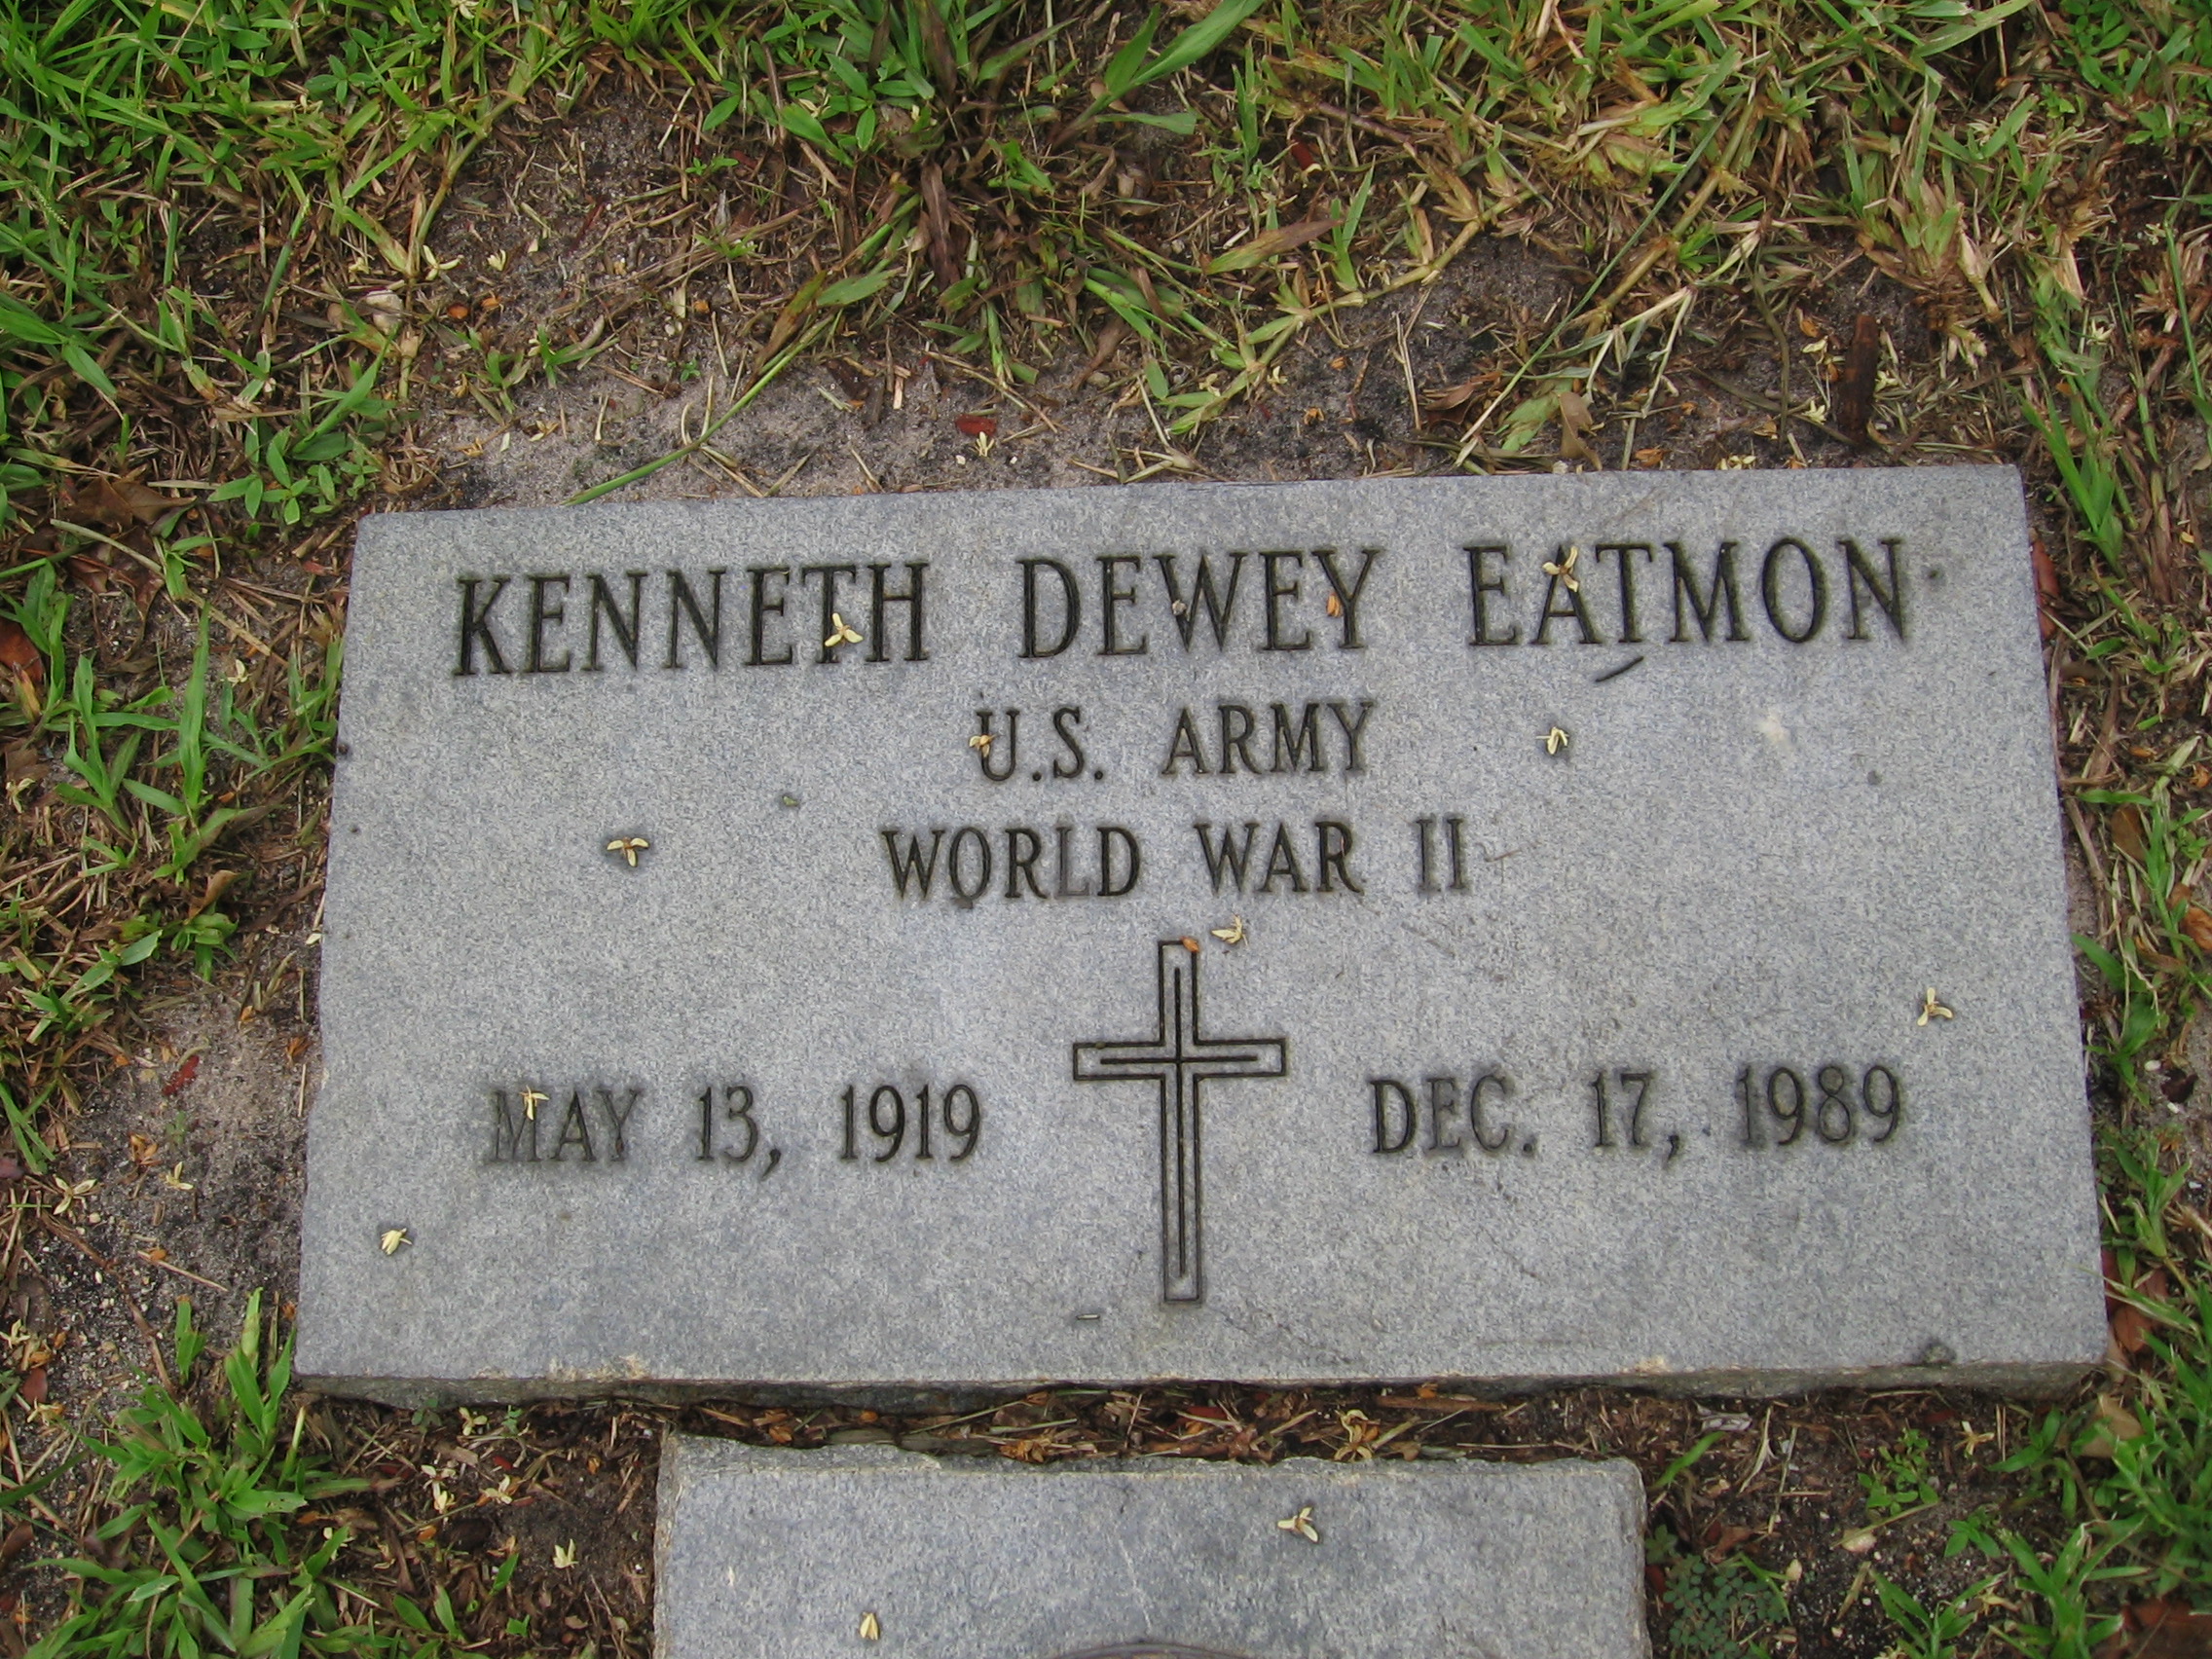 Kenneth Dewey Eatmon